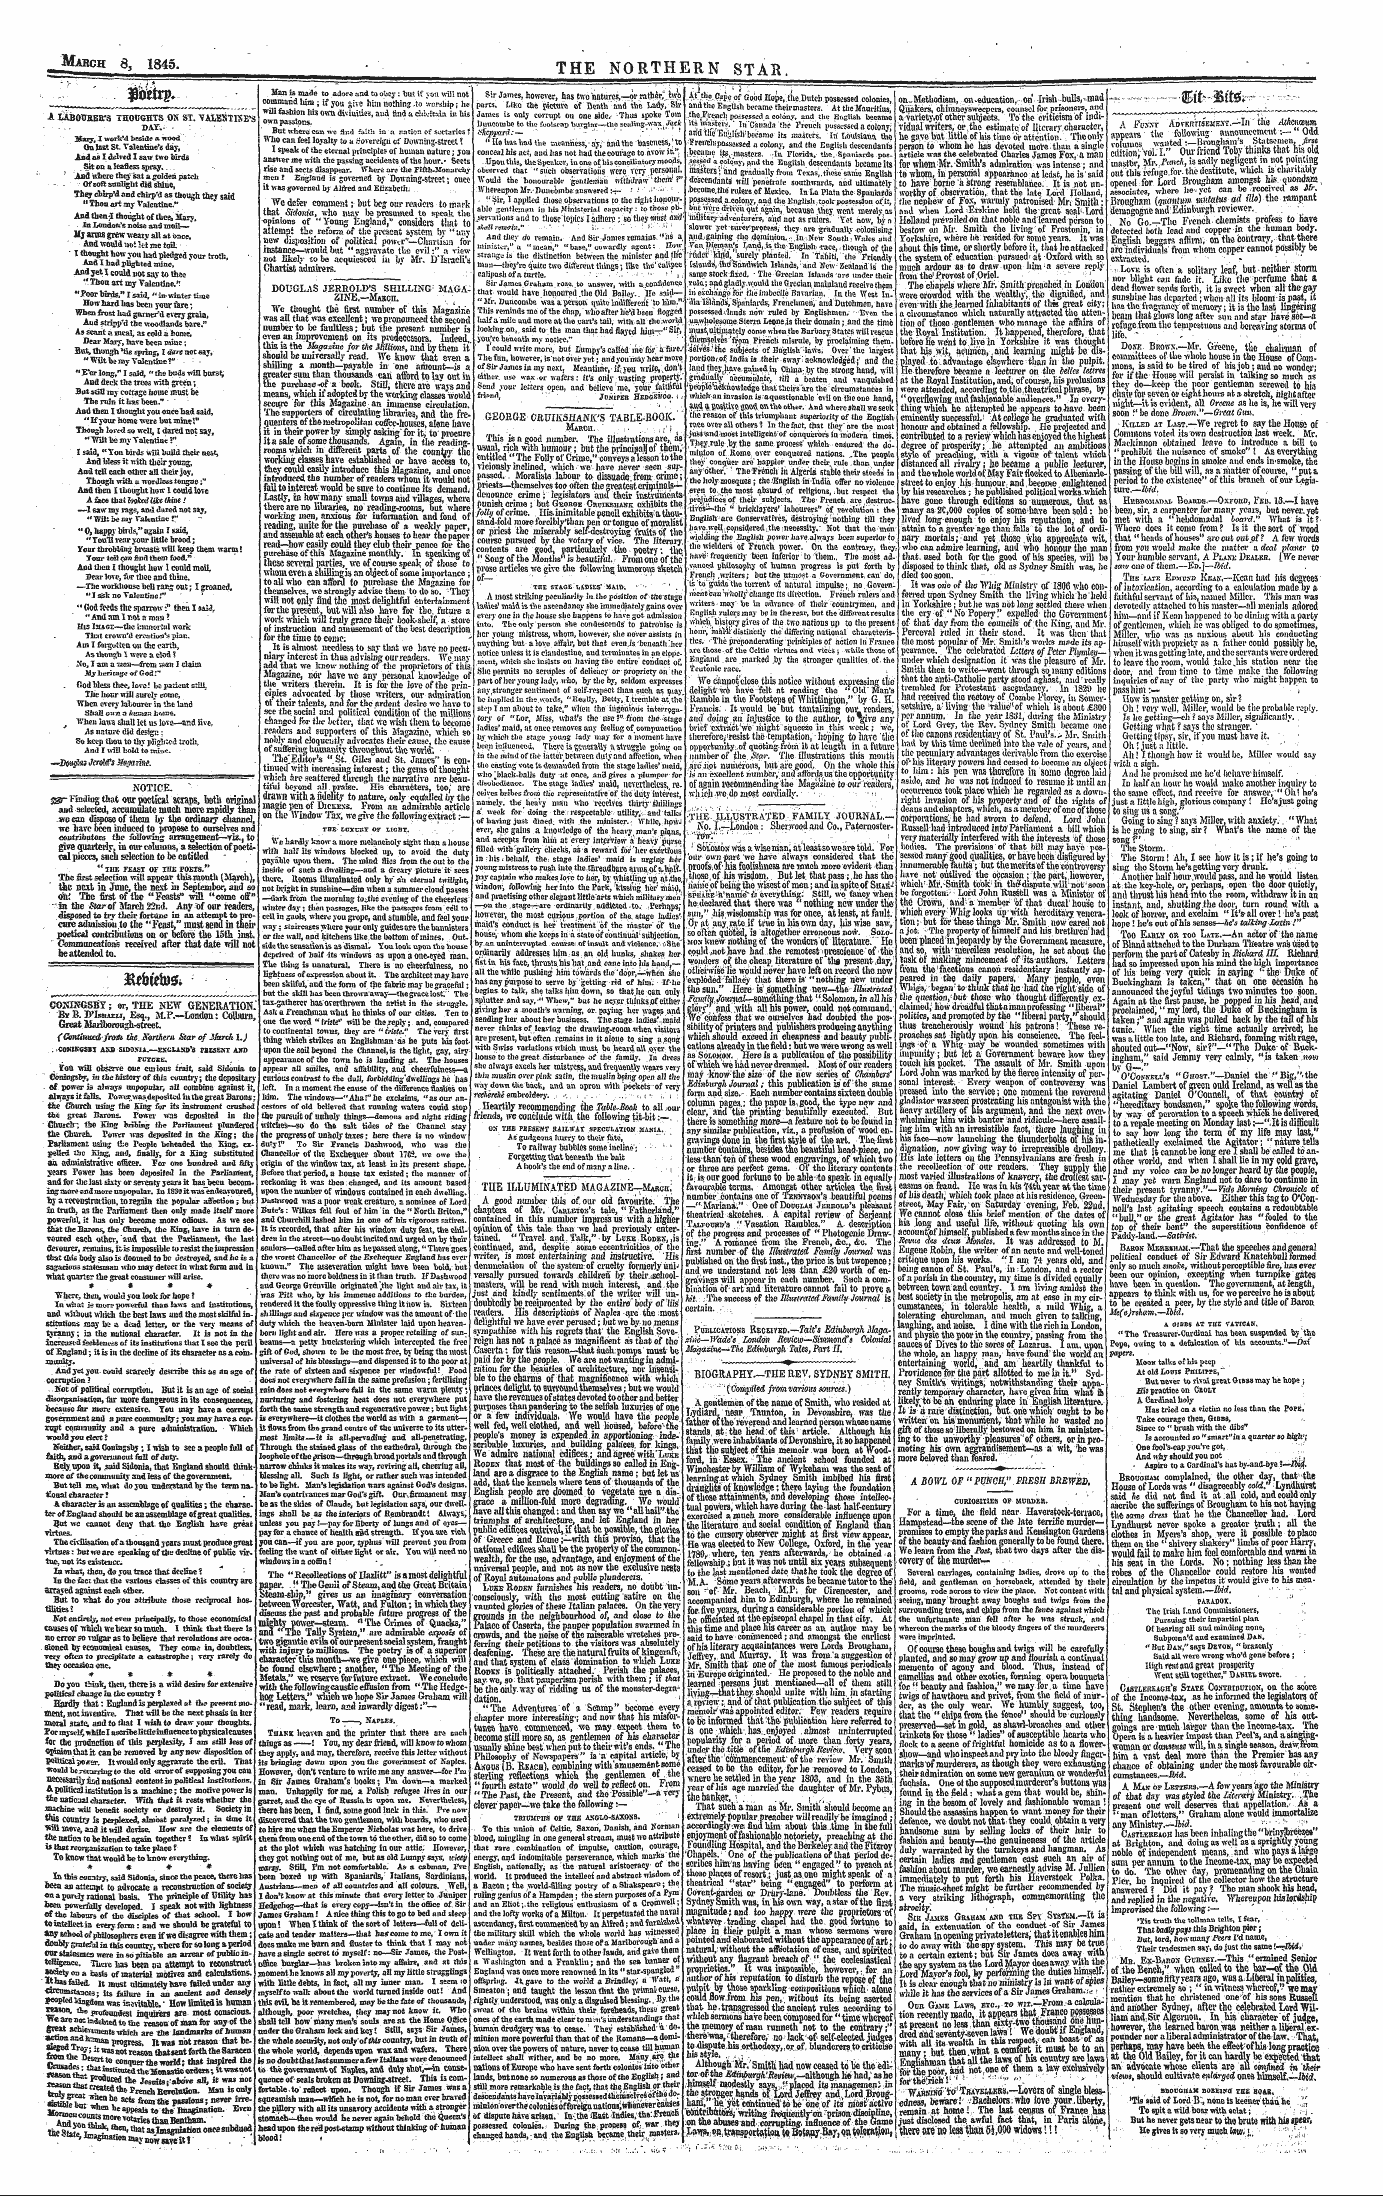 Northern Star (1837-1852): jS F Y, 3rd edition - Notice.